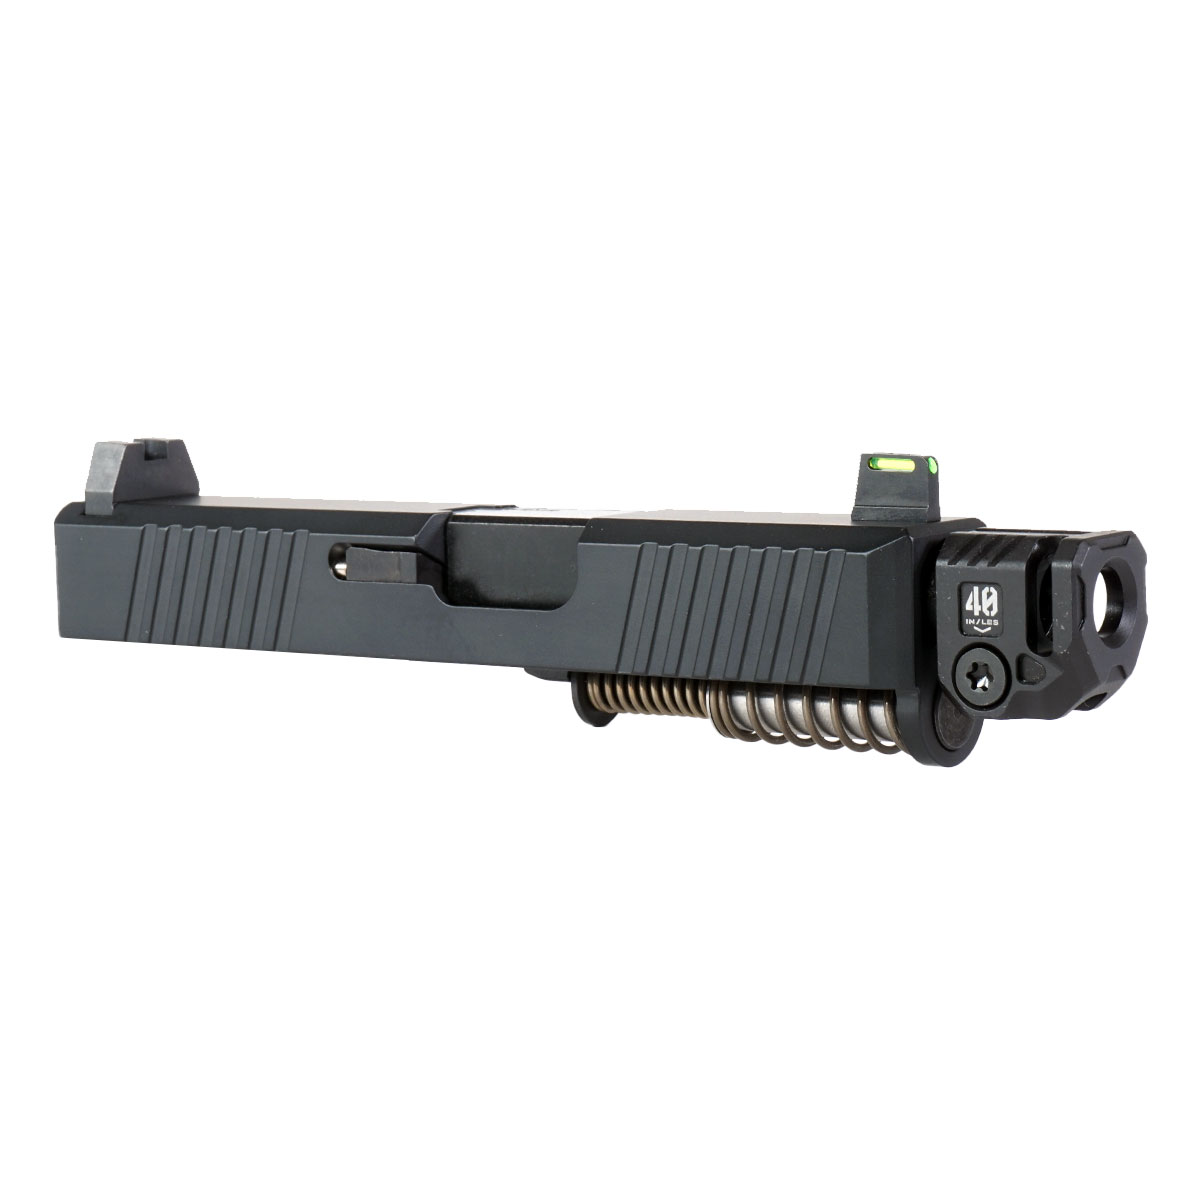 MMC 'Joint Resolution' 9mm Complete Slide Kit - Glock 26 Gen 1-3 Compatible